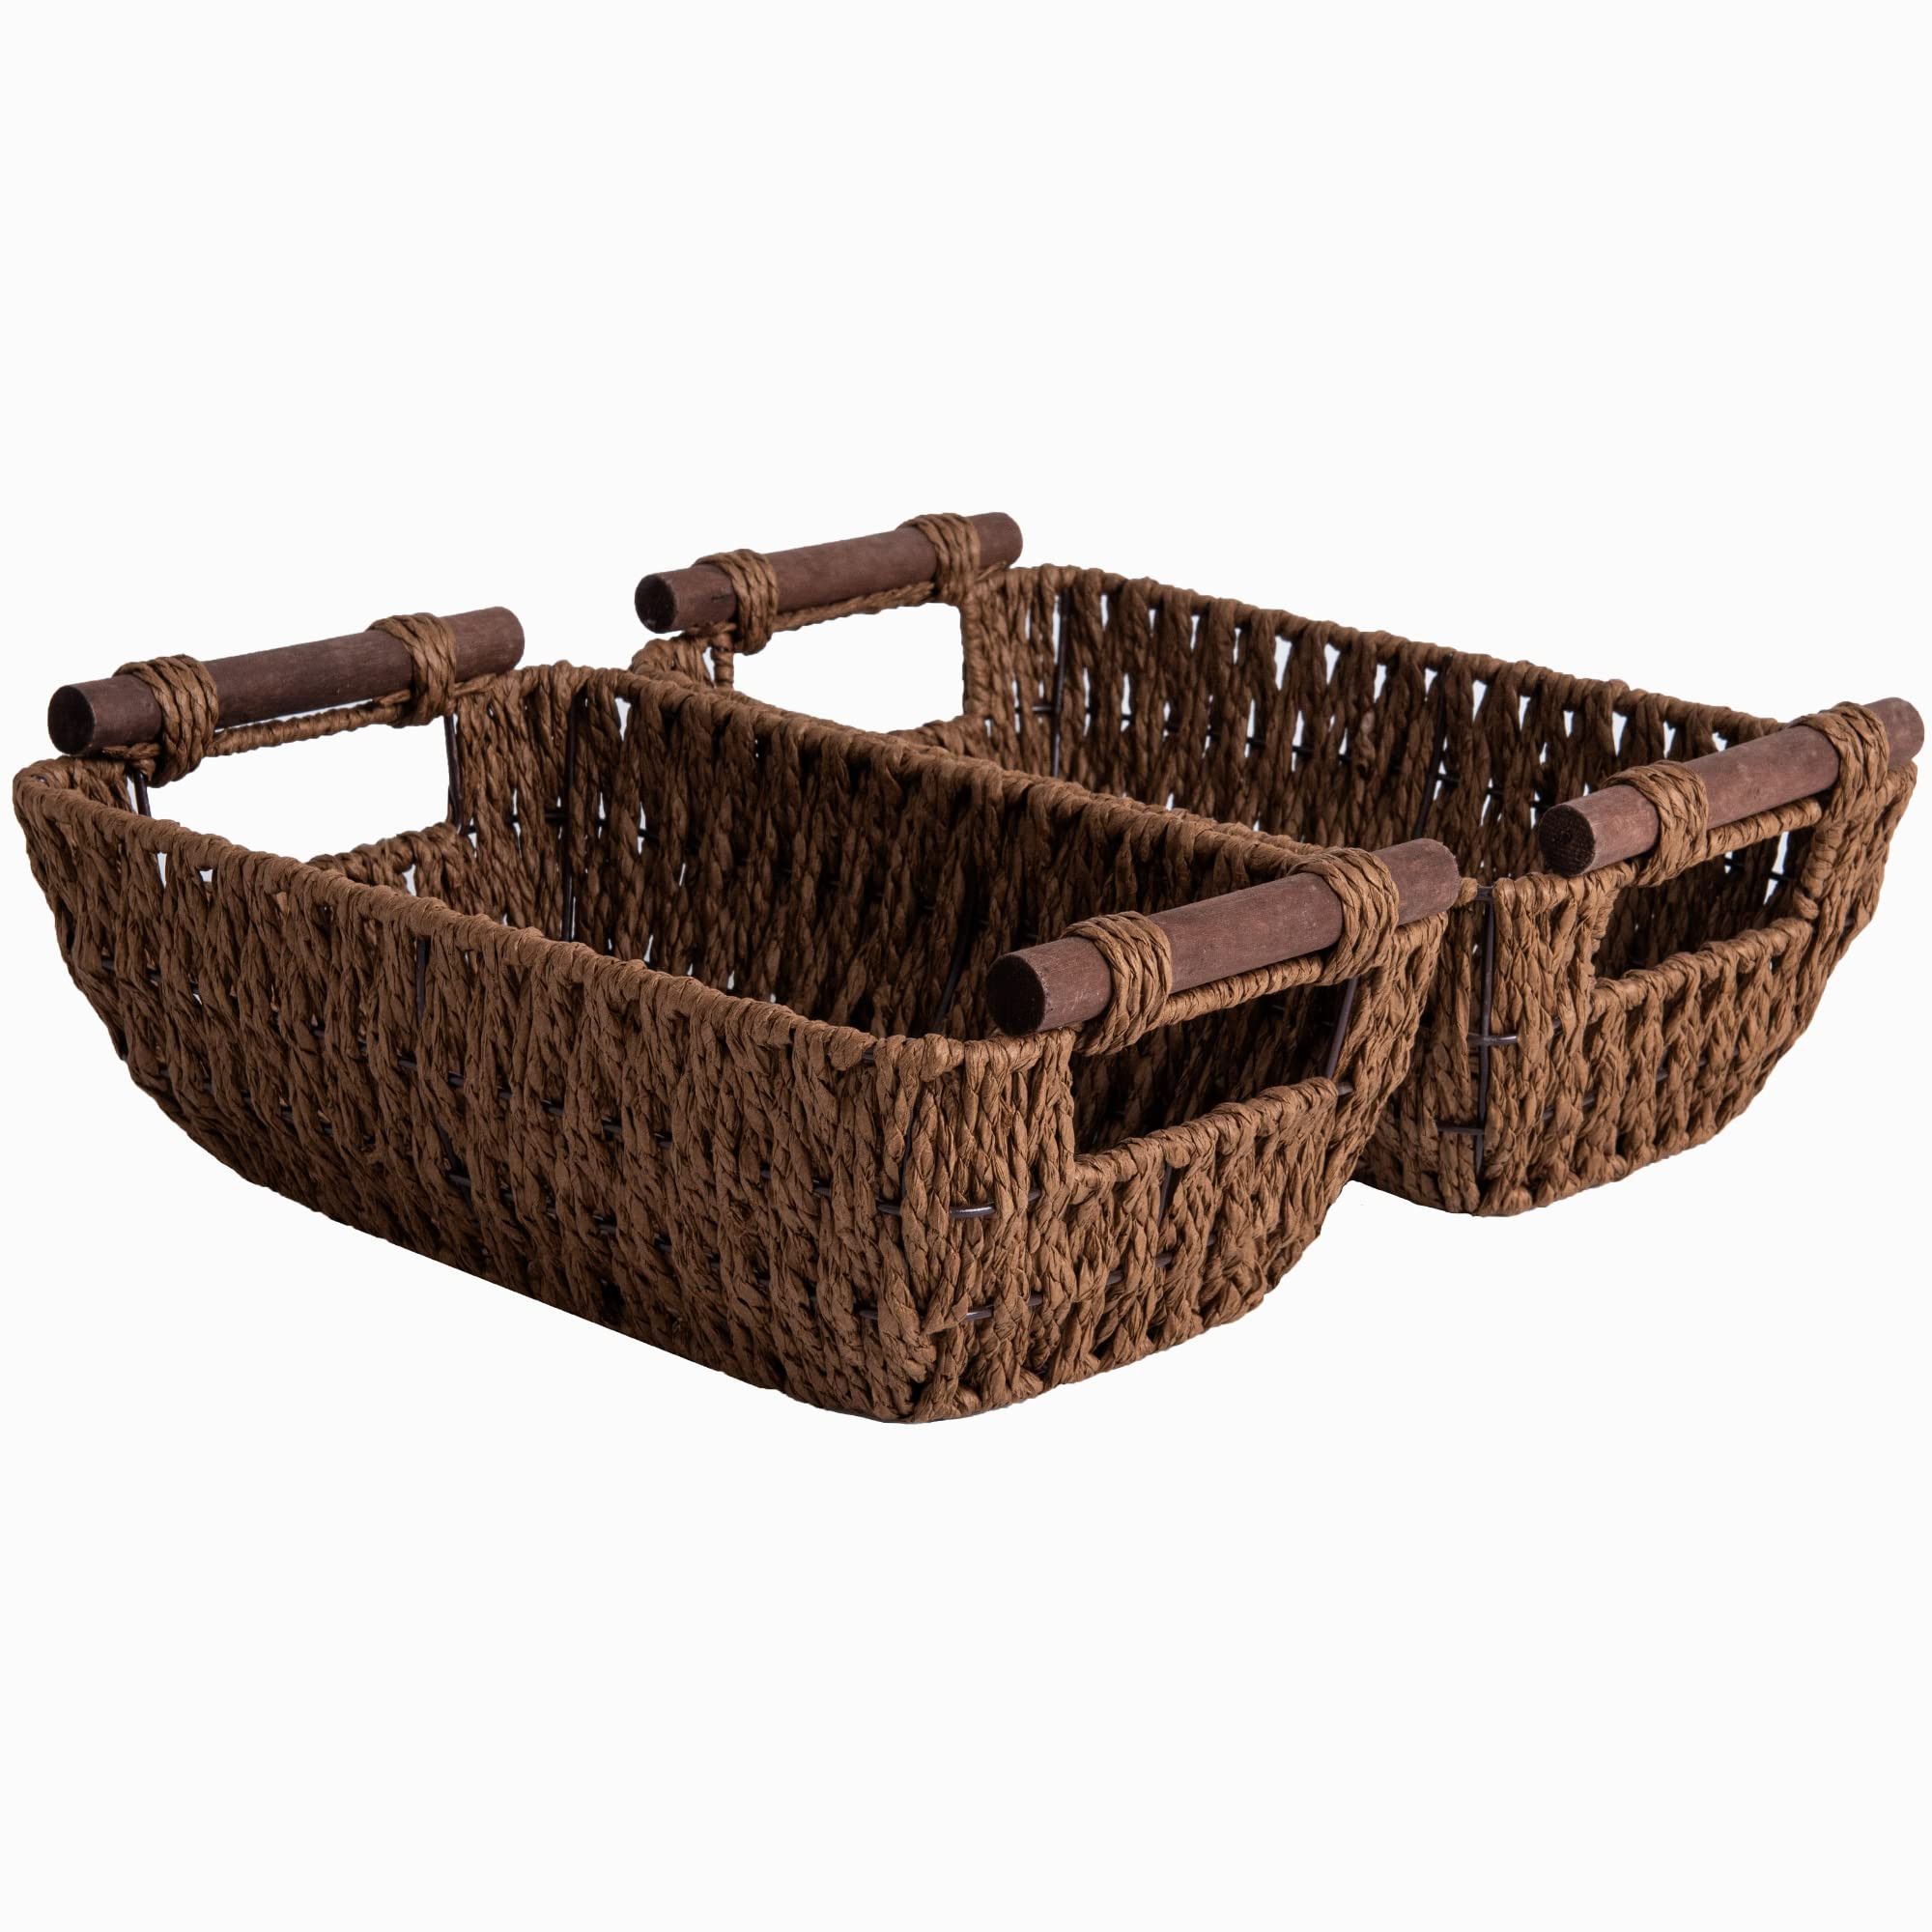 StorageWorks Handwoven Small Wicker Baskets, Round Paper Rope Storage Baskets with Wooden Handles... | Amazon (US)